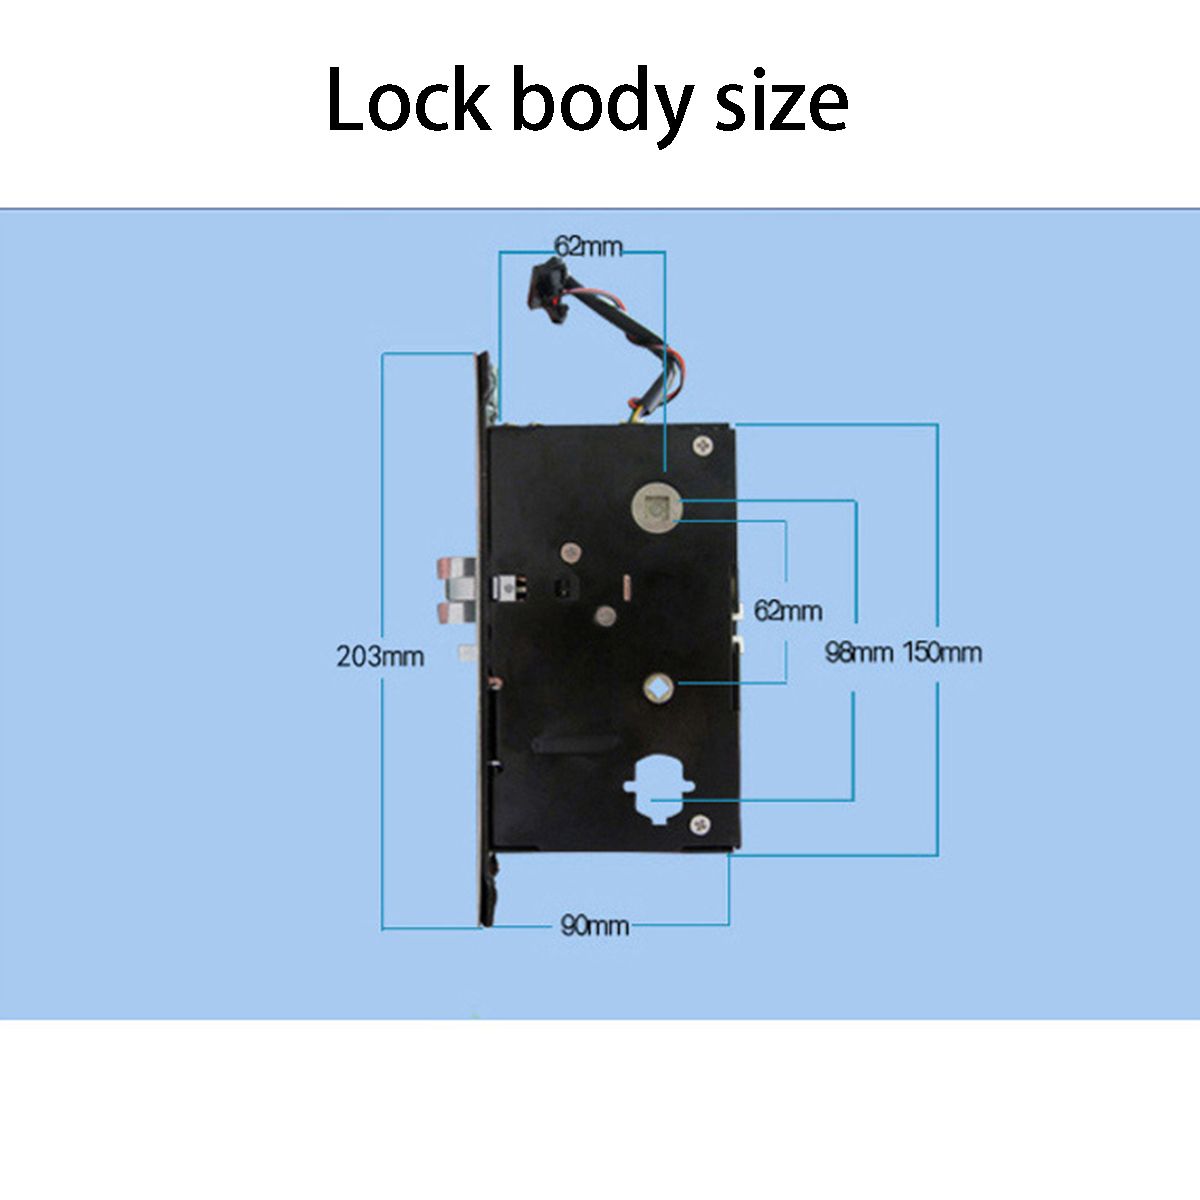 Digital-Smart-Door-Lock-Electronic-Home-Hotel-Security-Keyless-Locks-1612516